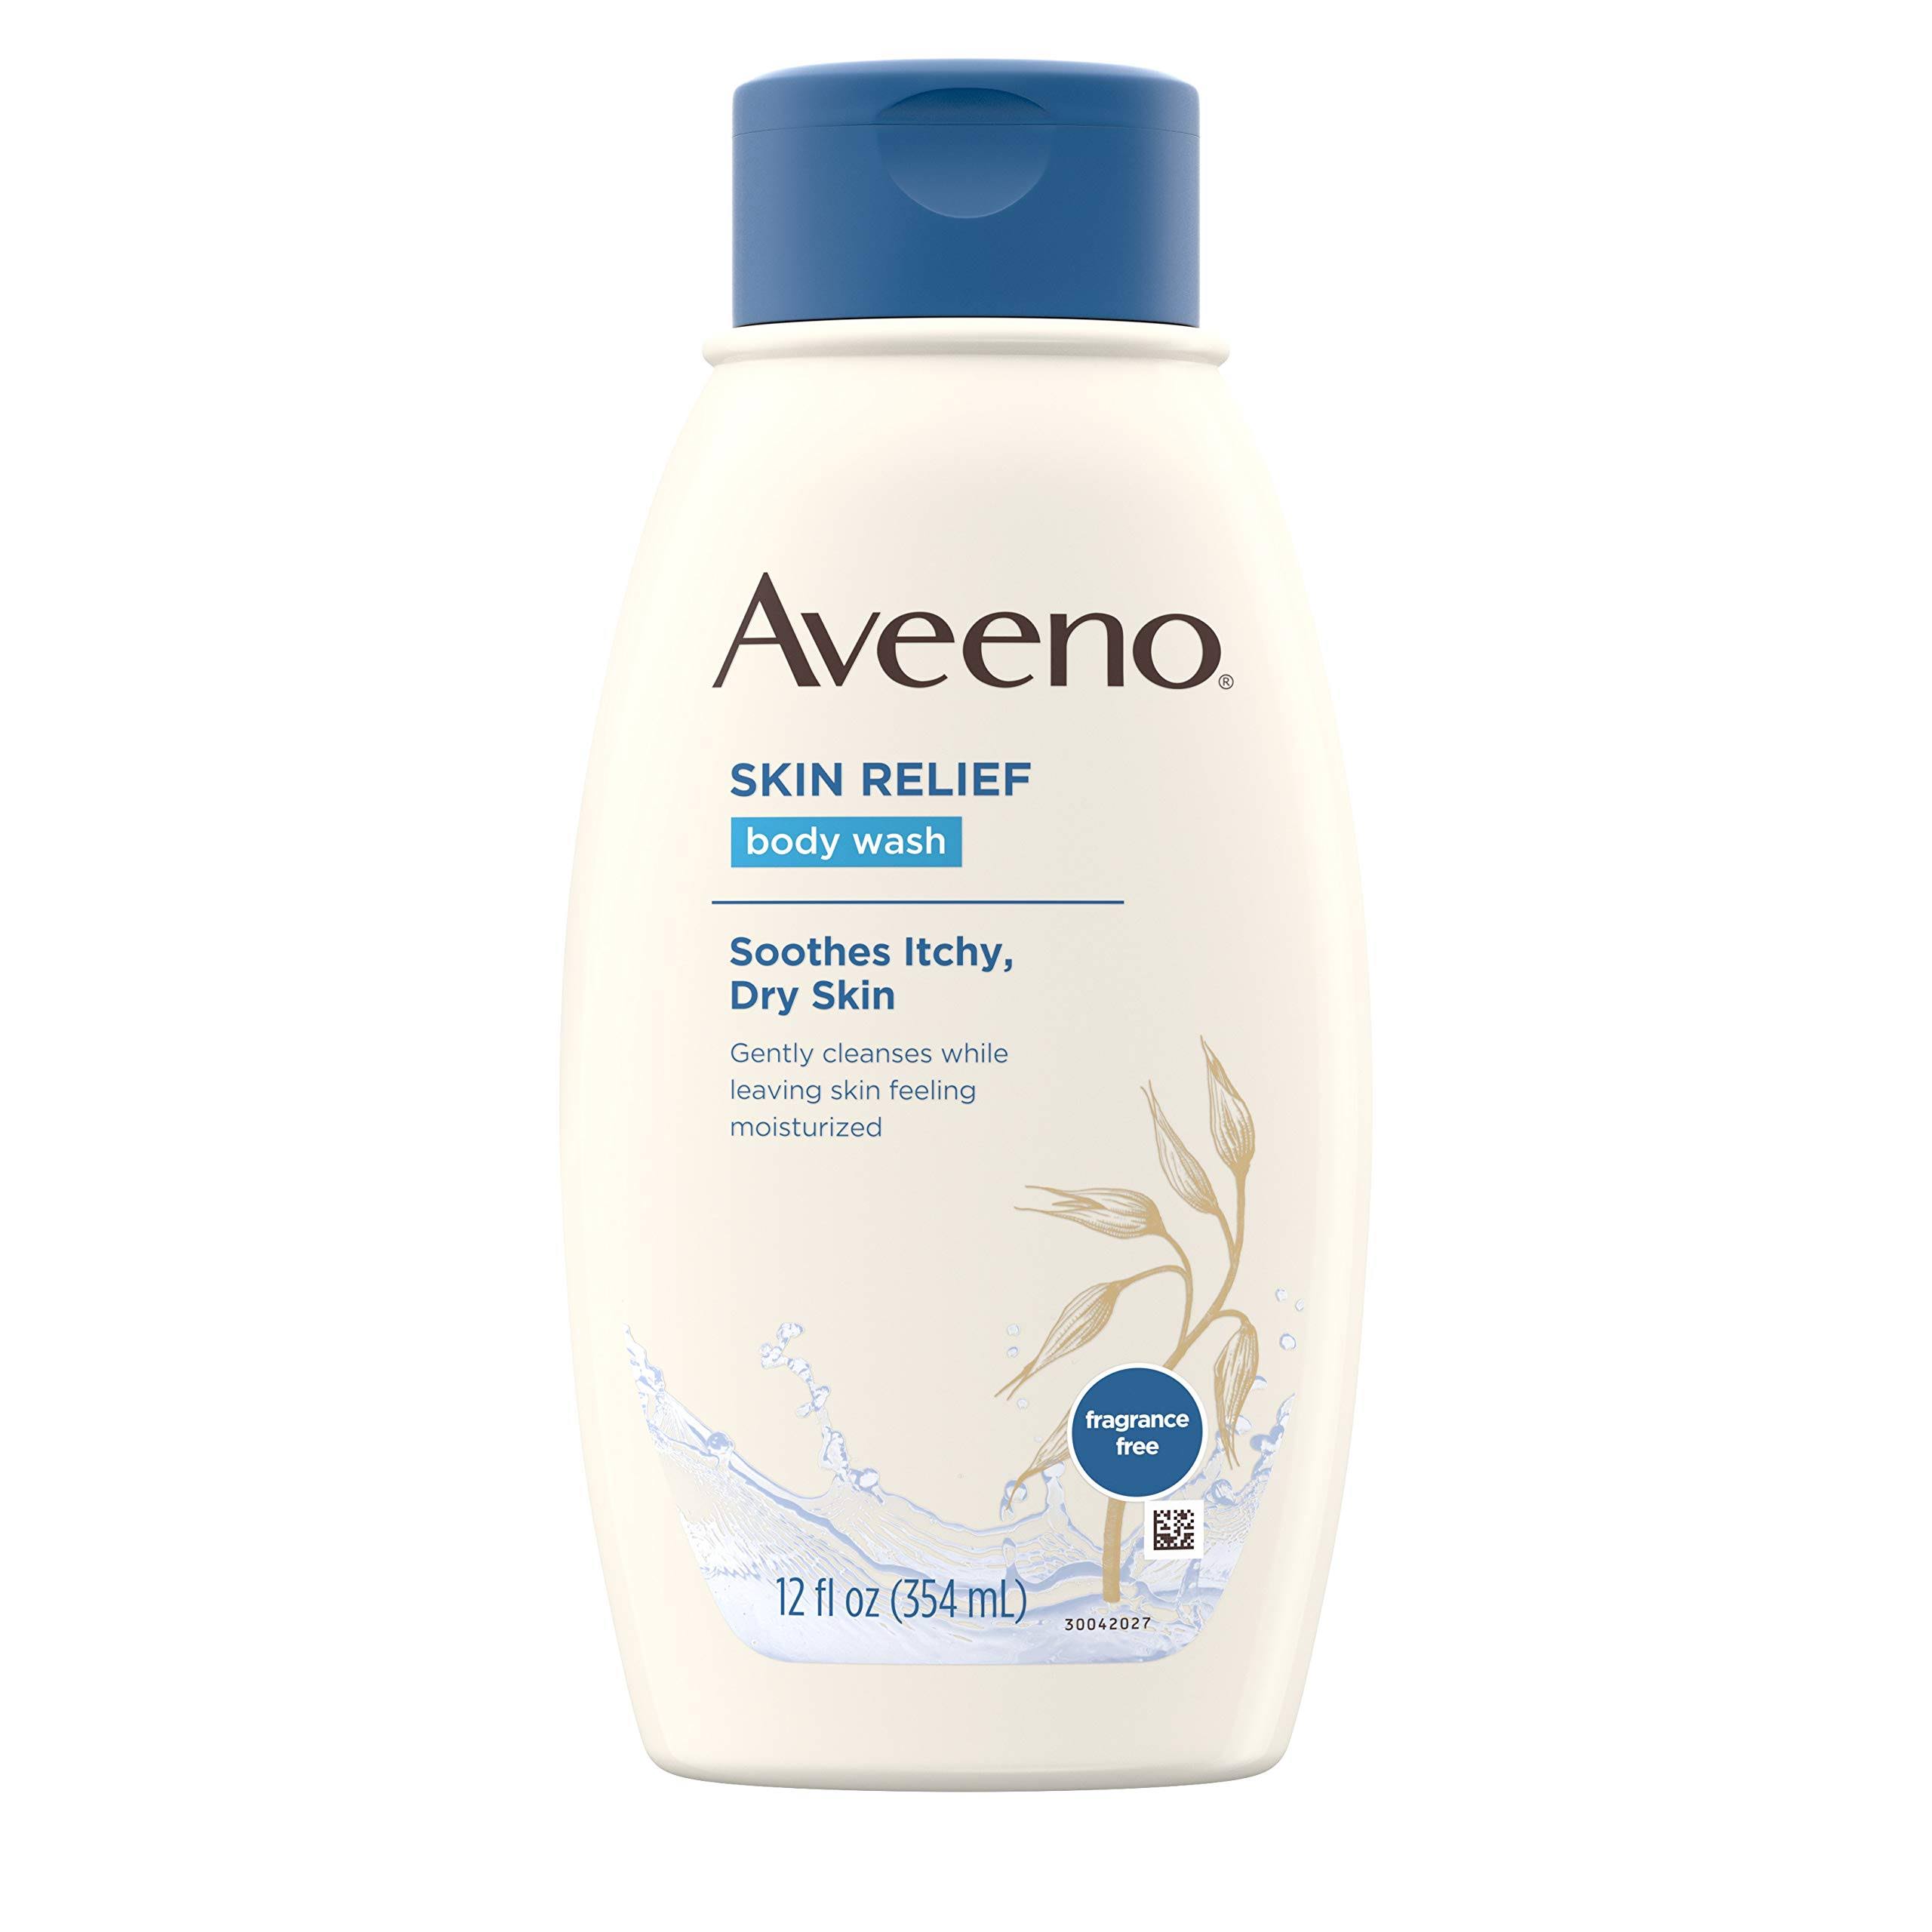 Aveeno Active Naturals Skin Relief Body Wash Fragrance